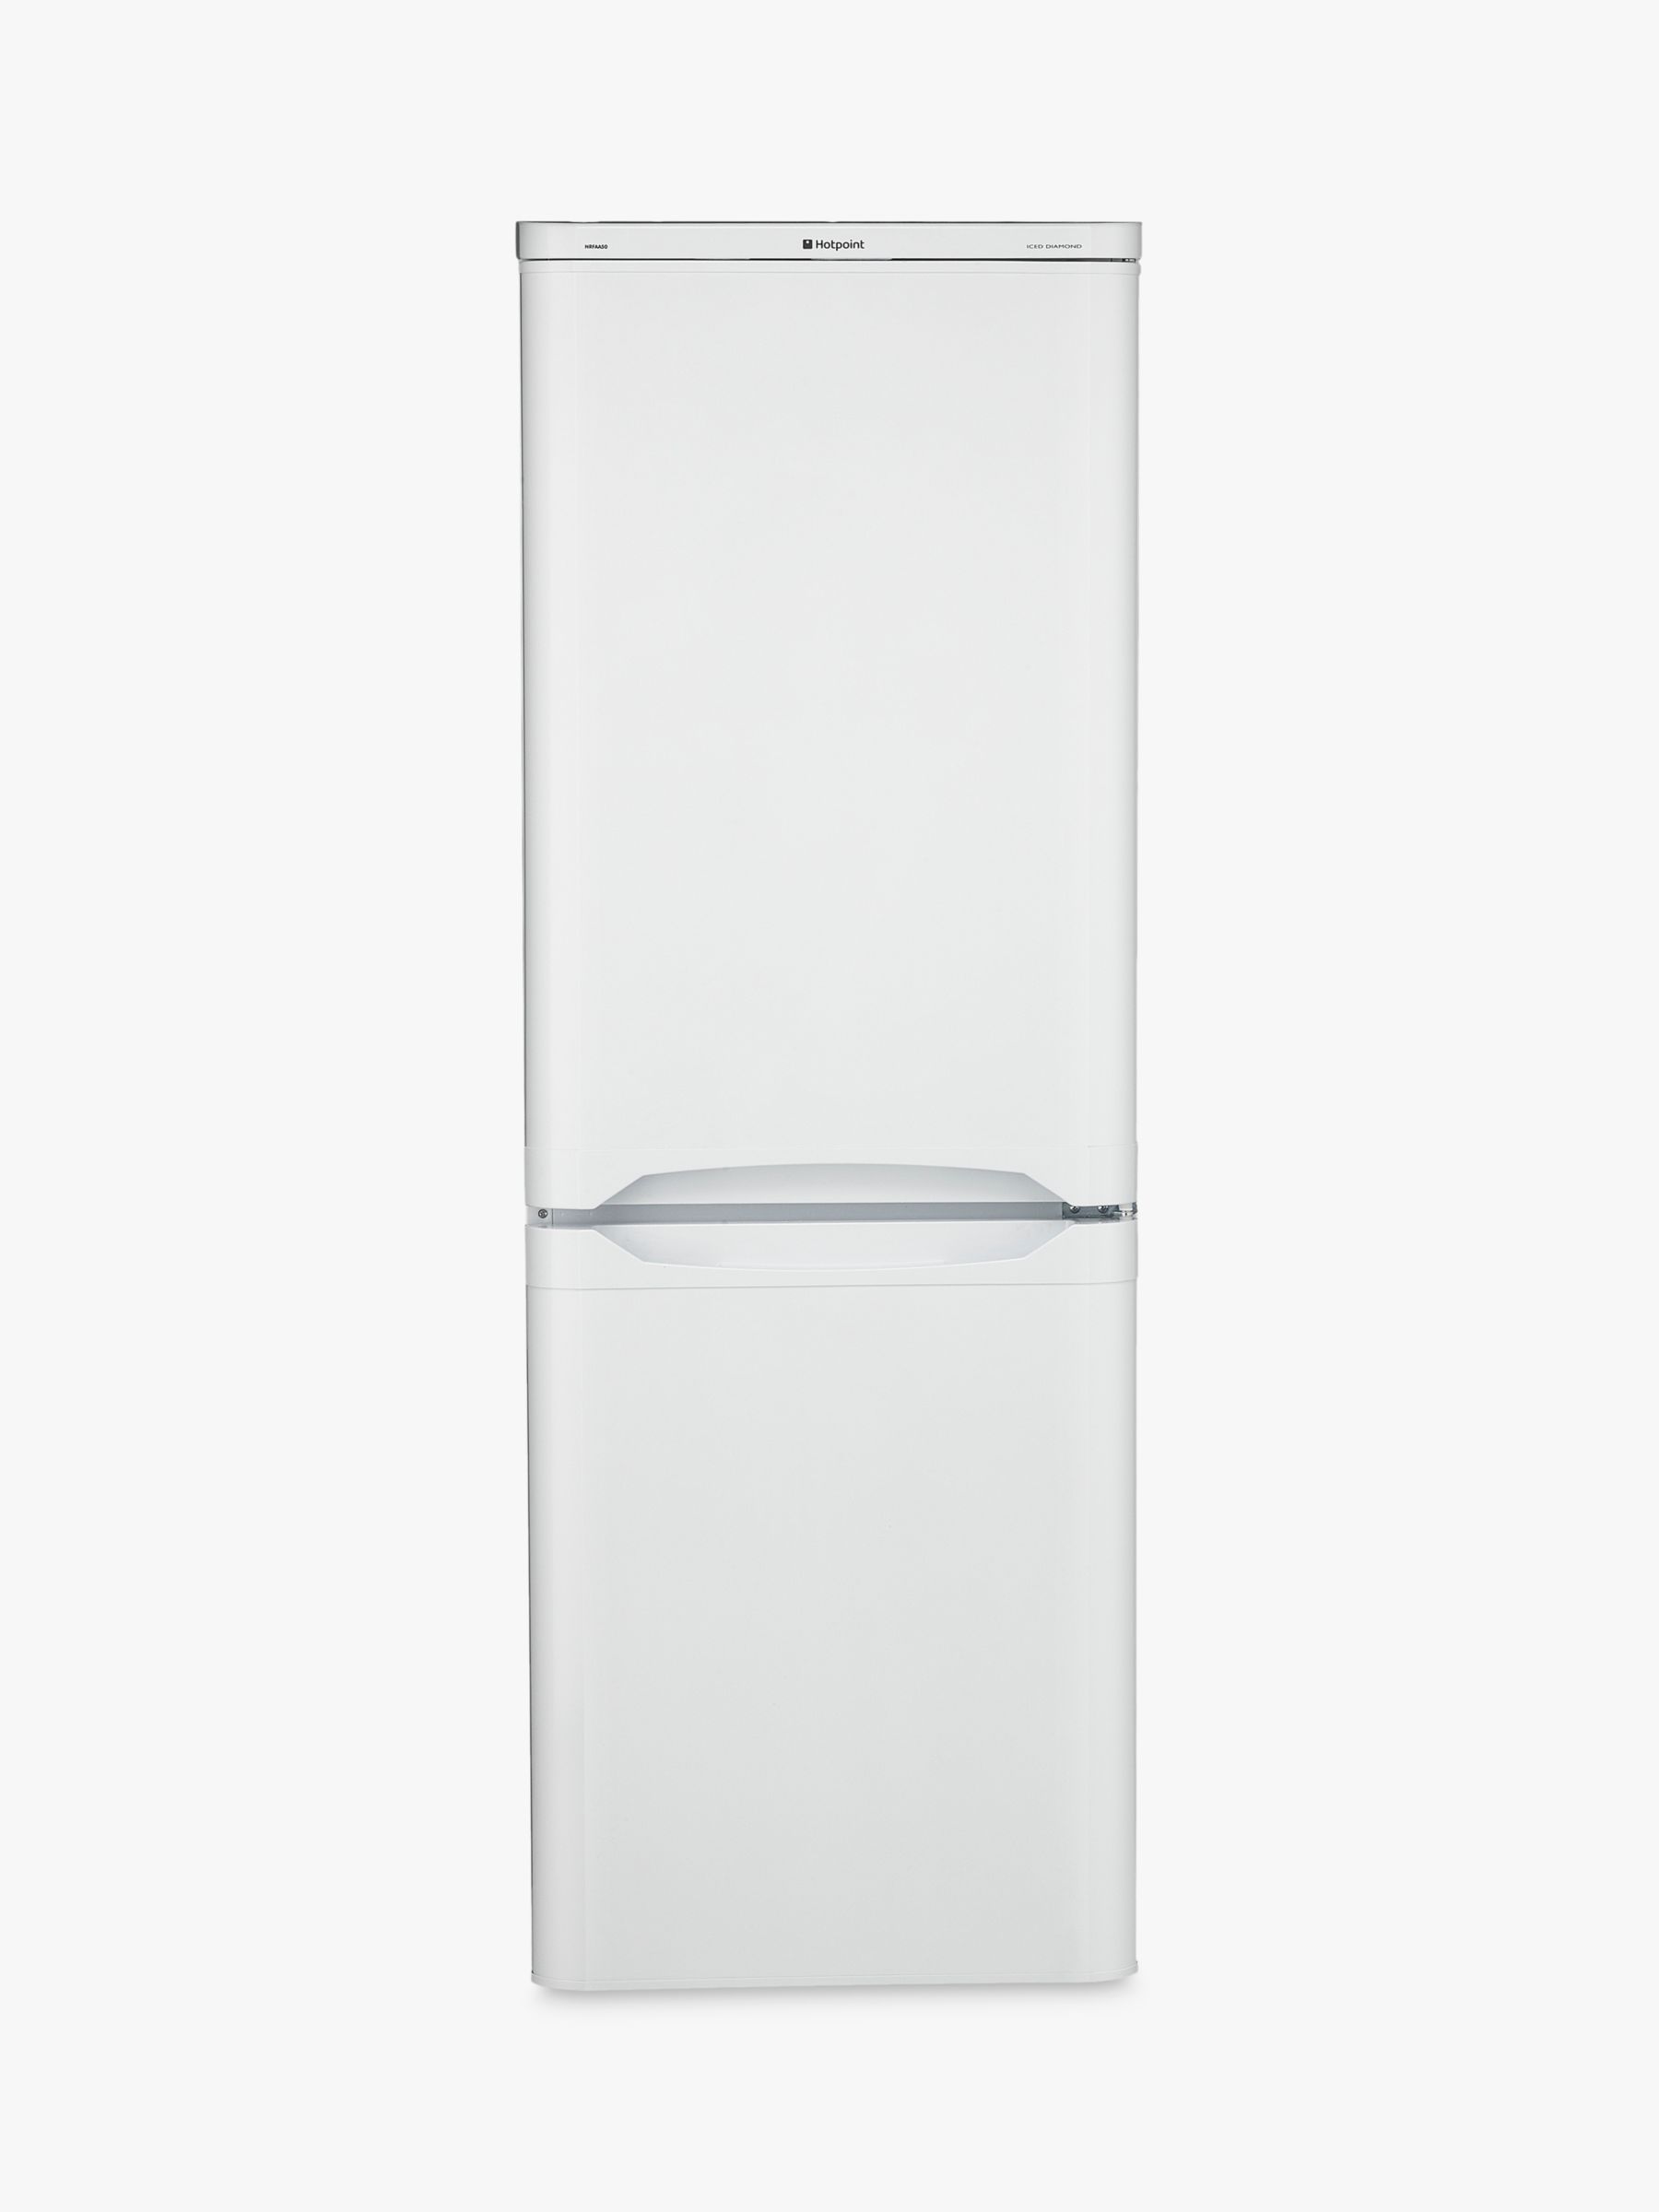 Hotpoint HBD5515W Freestanding Fridge Freezer, A+ Energy Rating, 55cm Wide, Polar White